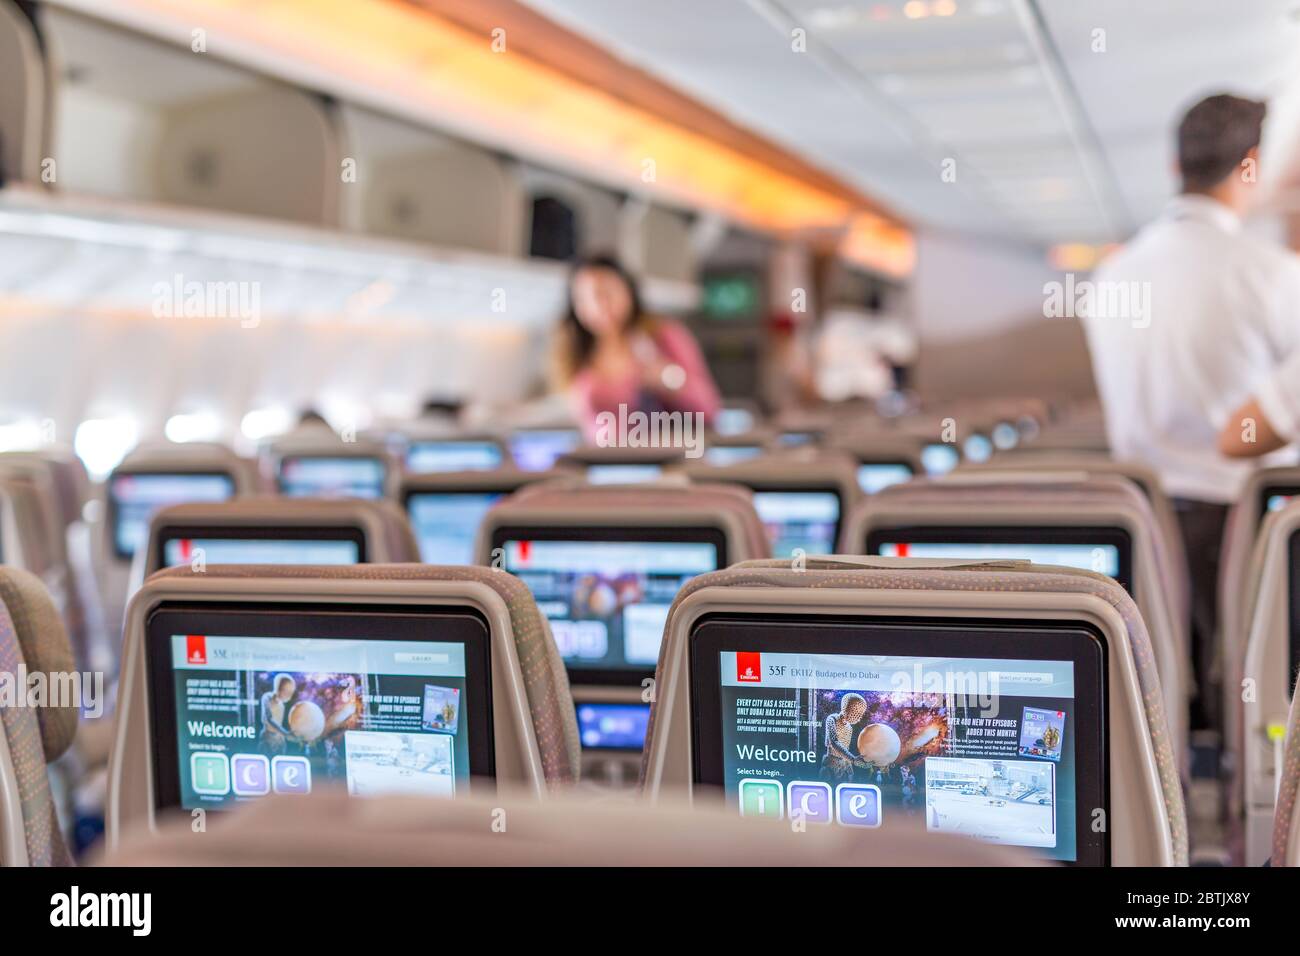 DUBAI, UAE - NOVEMBER 11, 2018: Entertainment display inside Emirates plane. Stock Photo